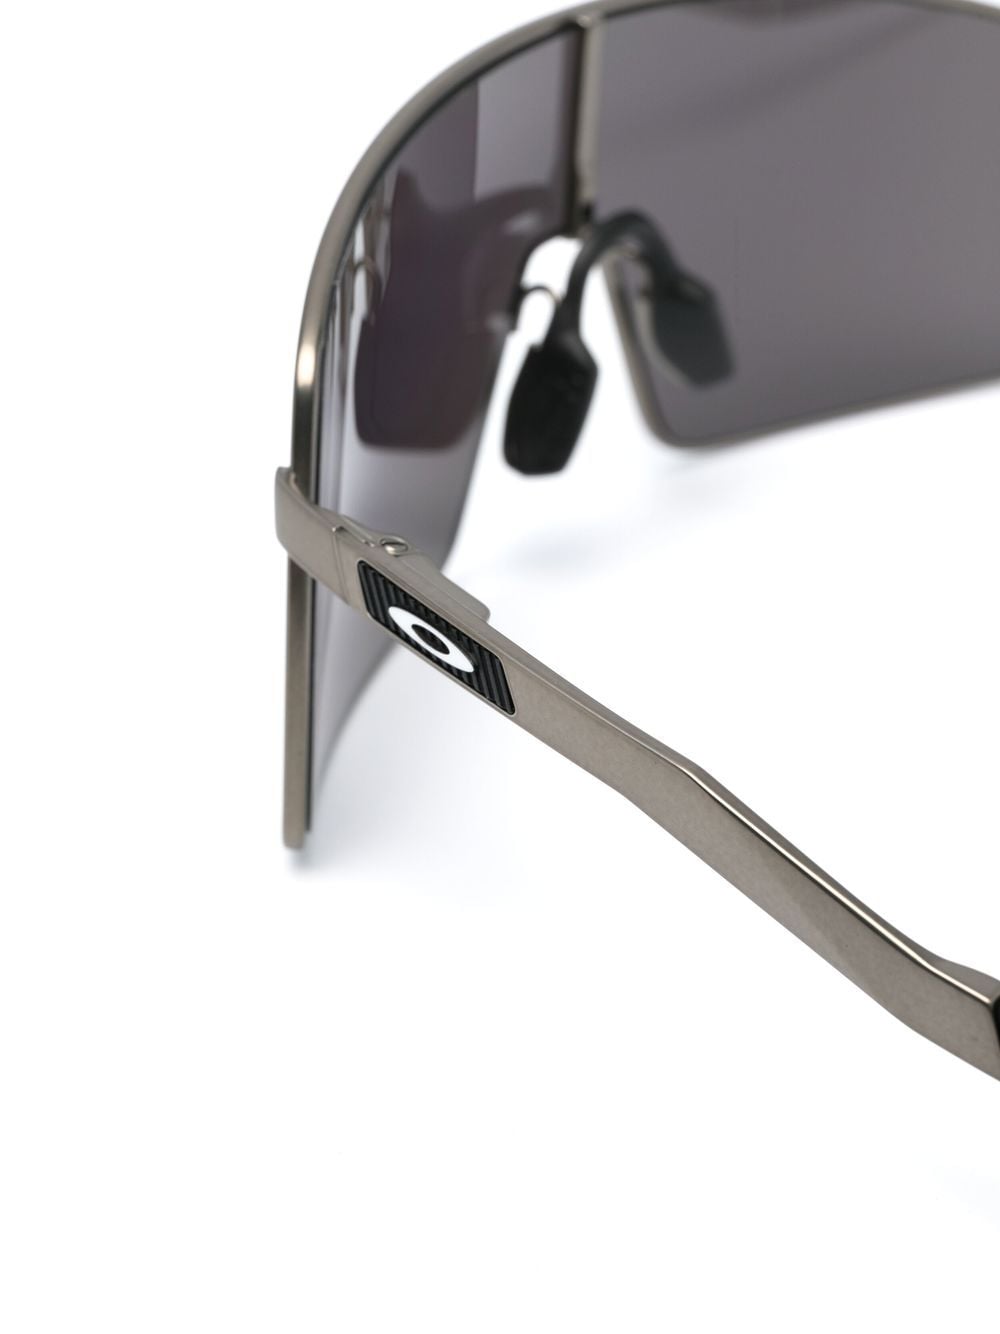 Gun metal Sutro Ti square-frame sunglasses